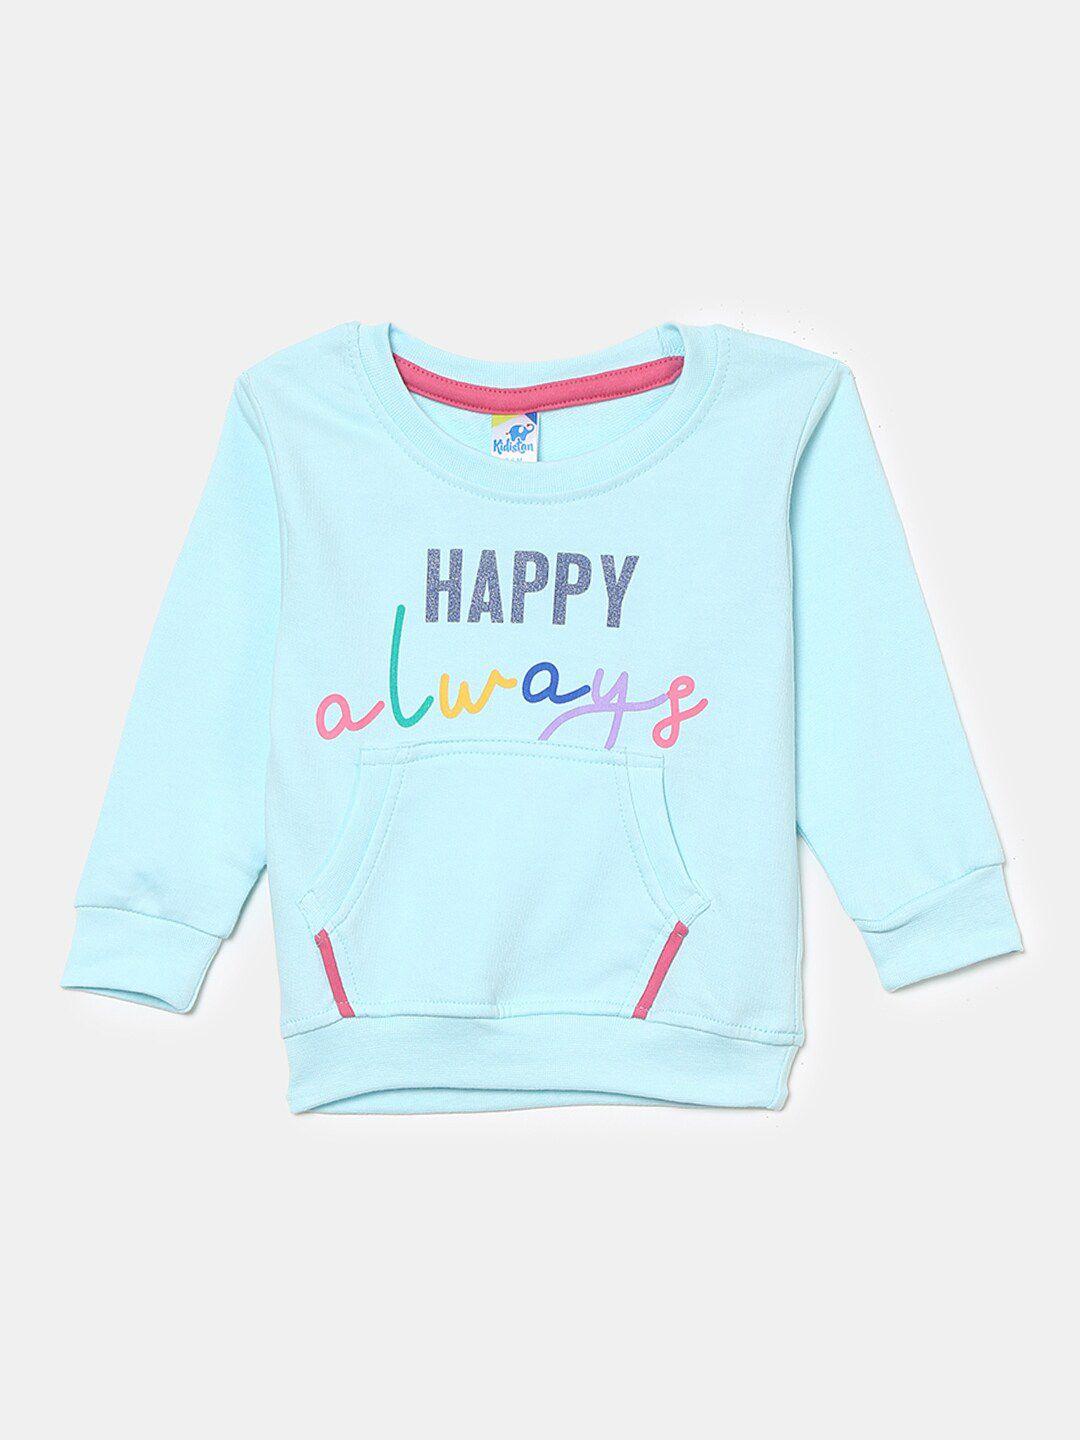 v-mart kids blue & pink typography printed cotton t-shirt